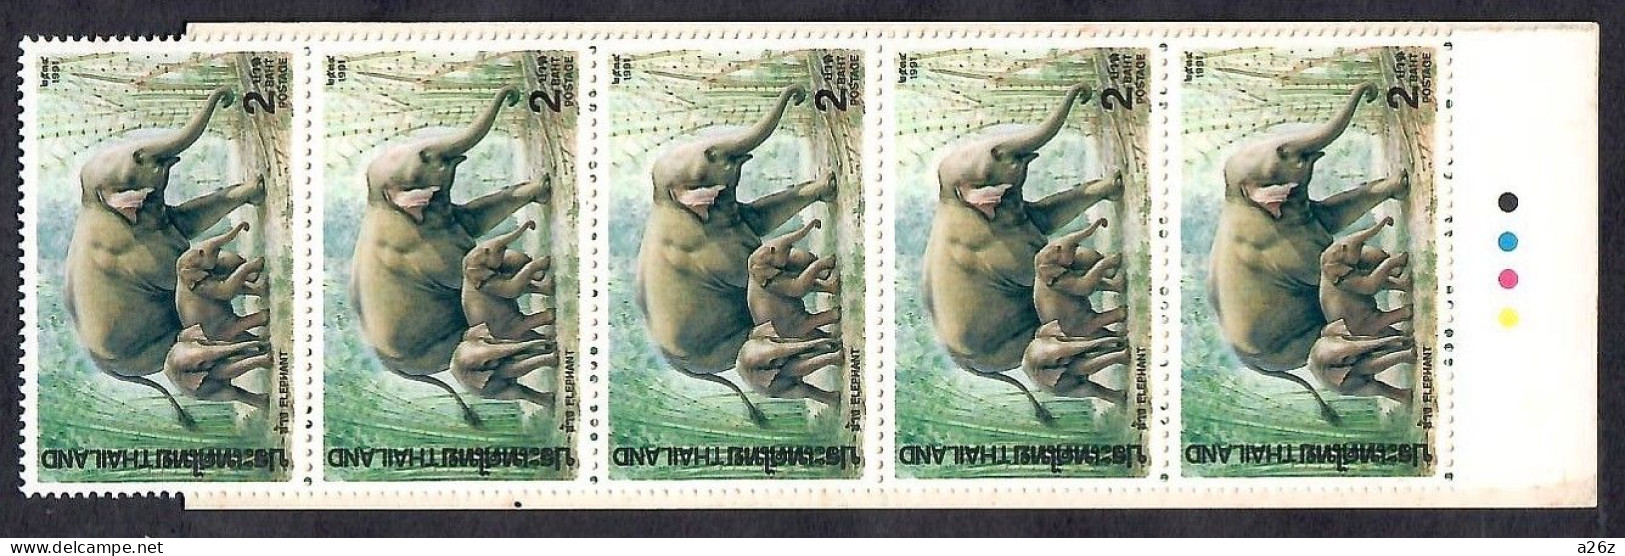 Thailand 1991 Asia Elephants Booklet MNH - Thailand